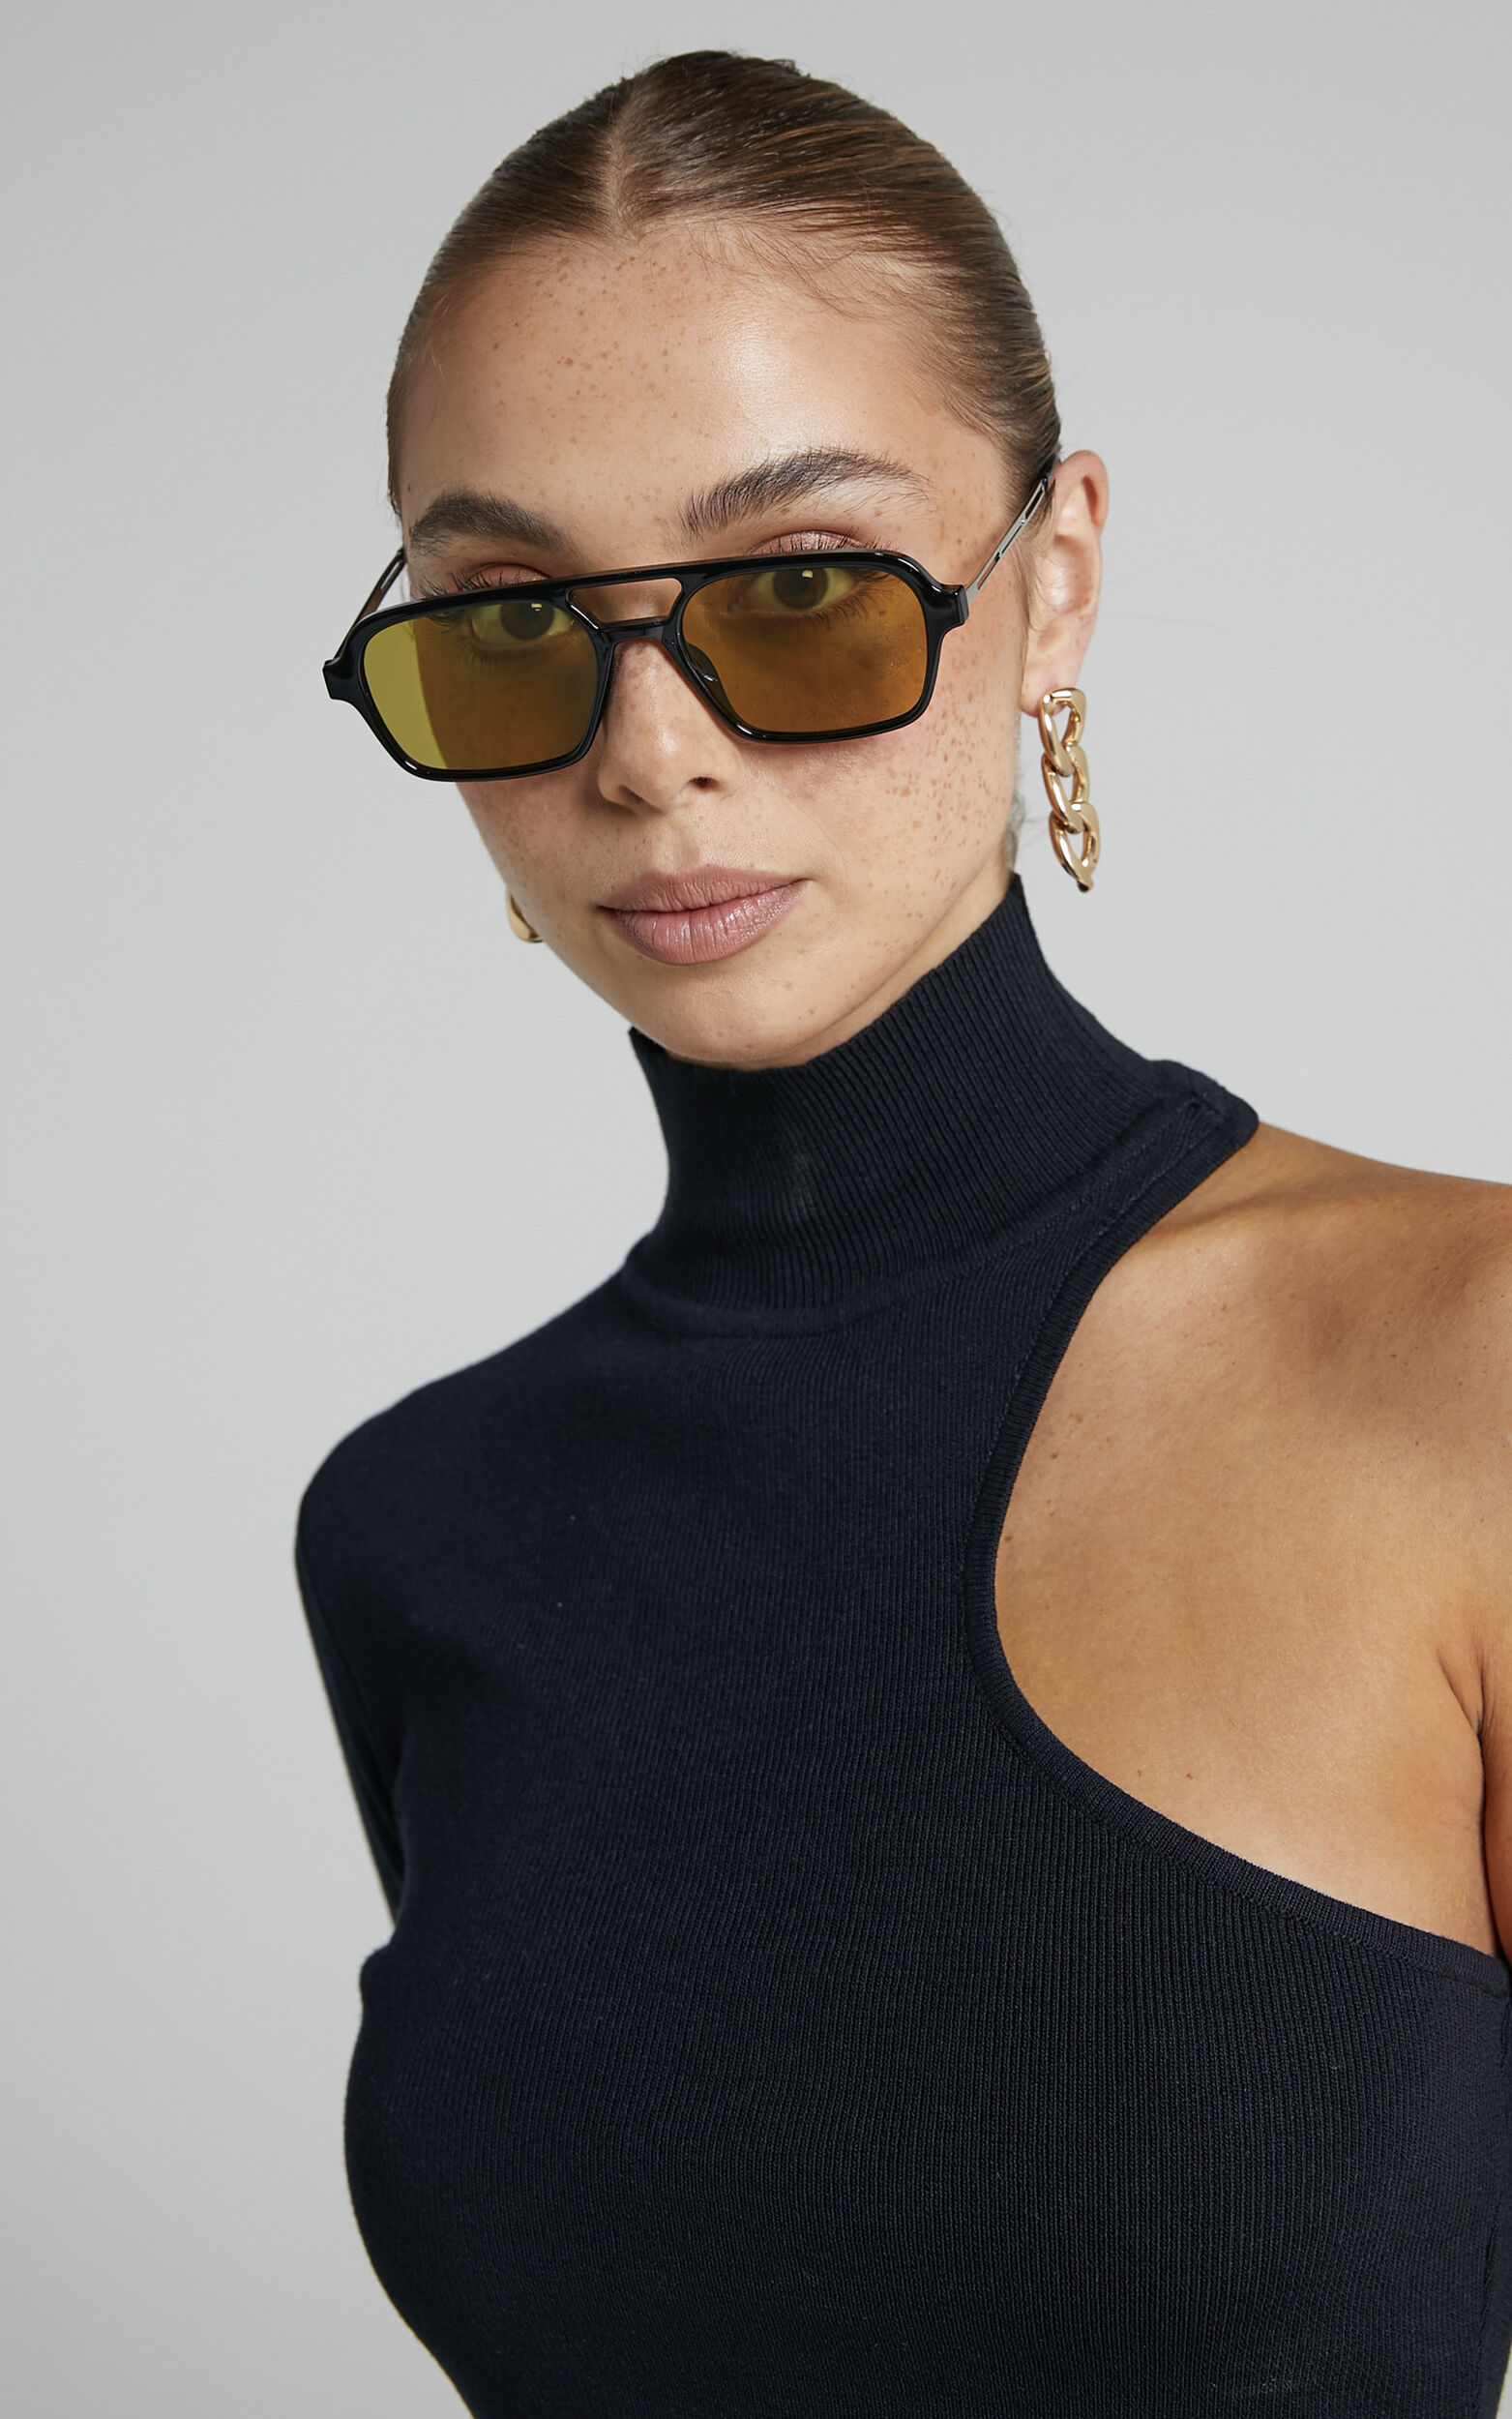 Marta Oversized Aviator Sunglasses in Black and Yellow - NoSize, BLK2